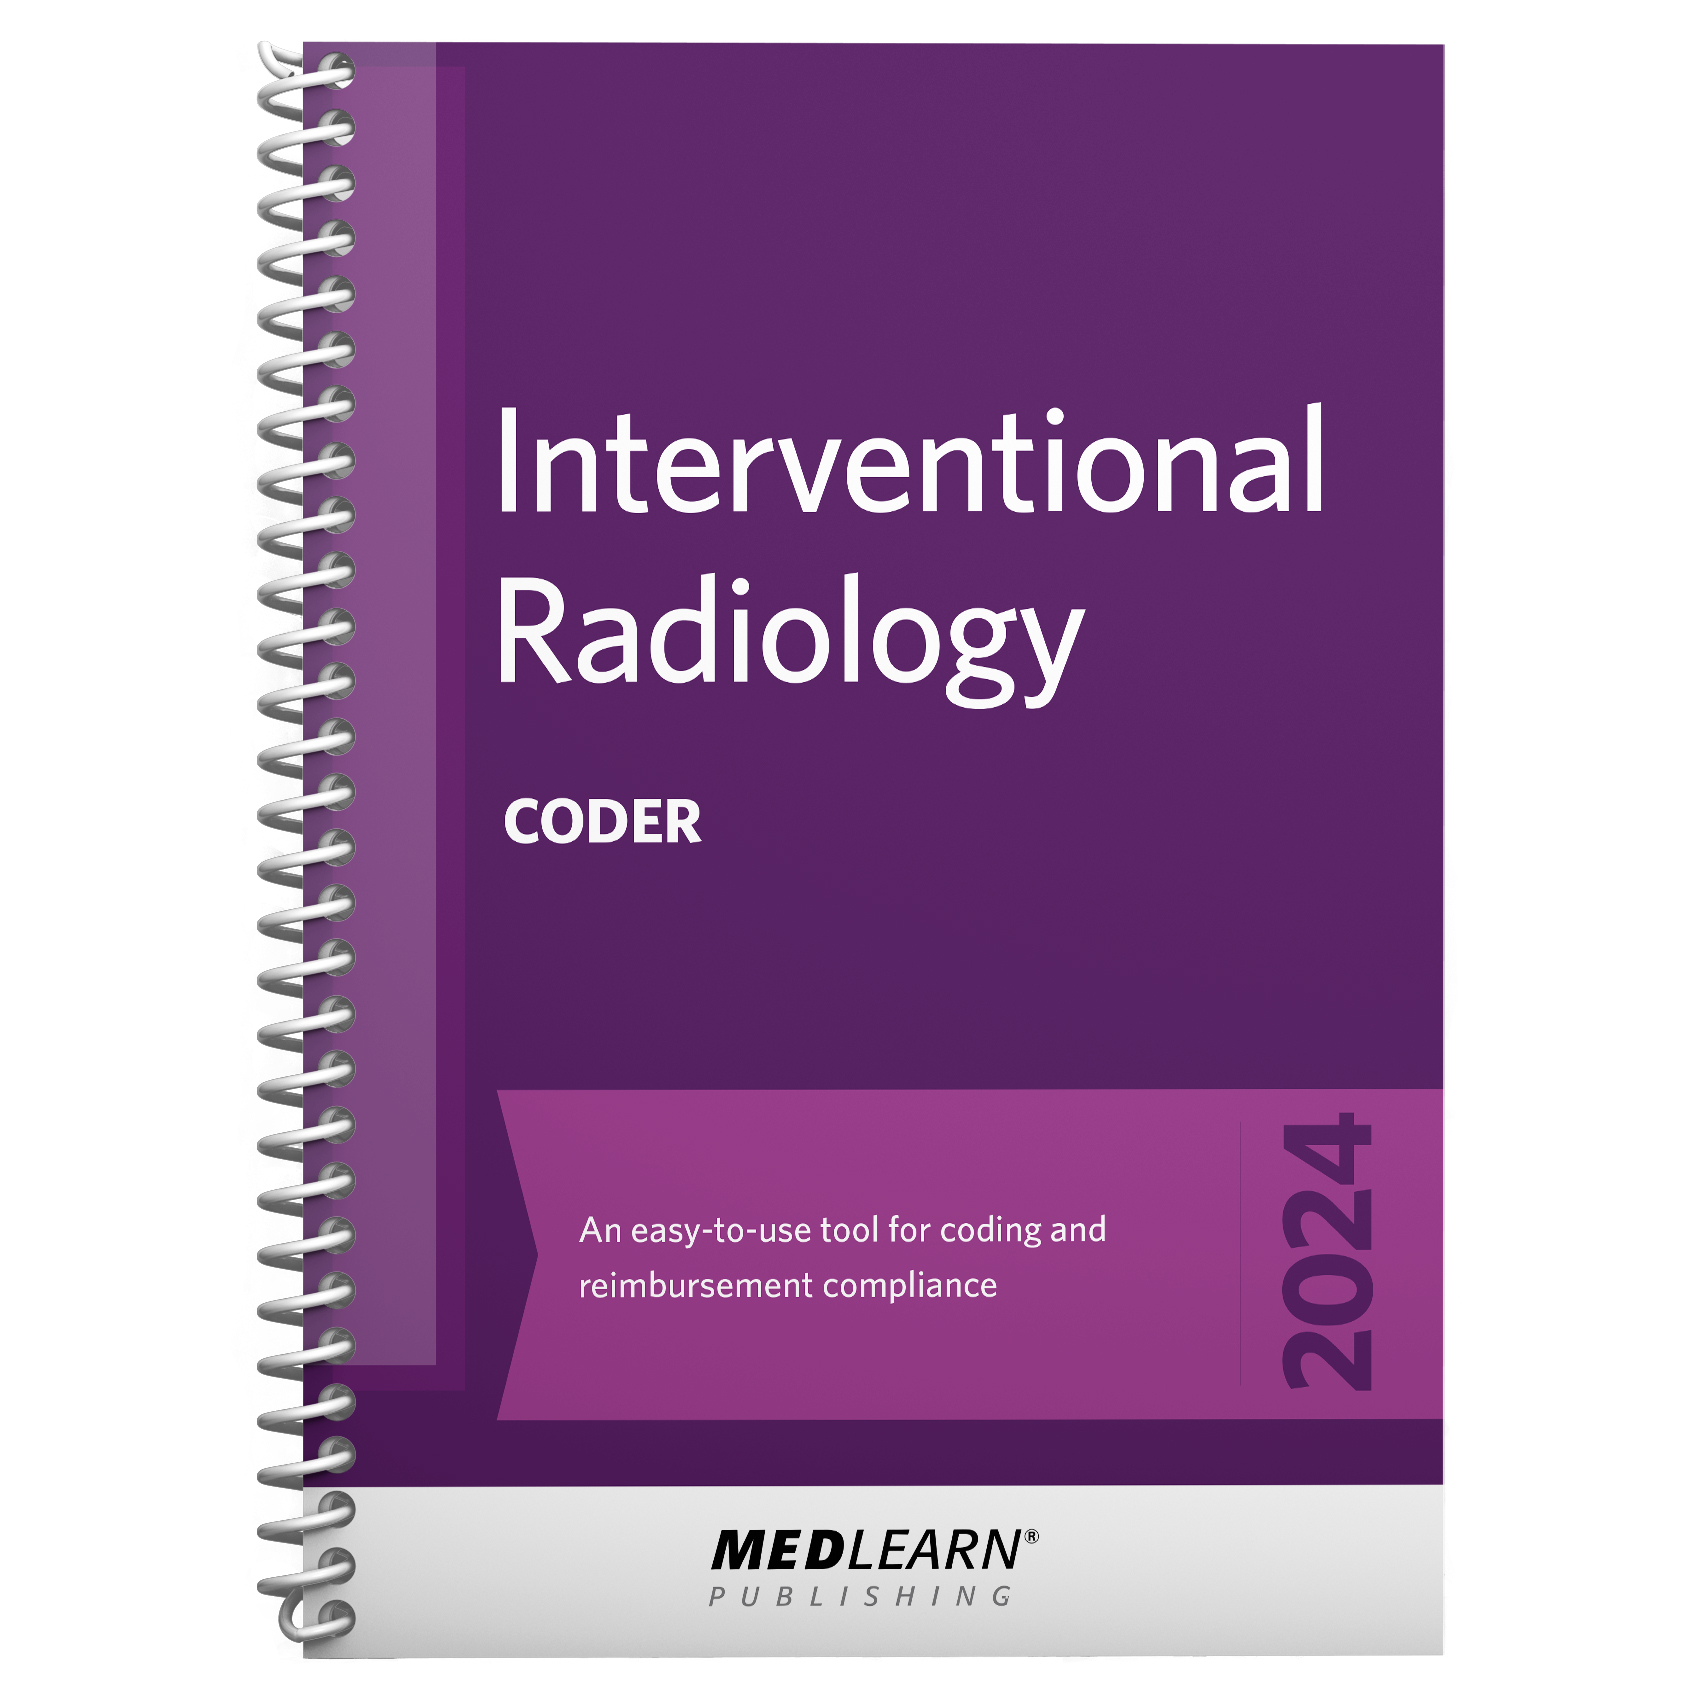 Interventional Radiology Coder